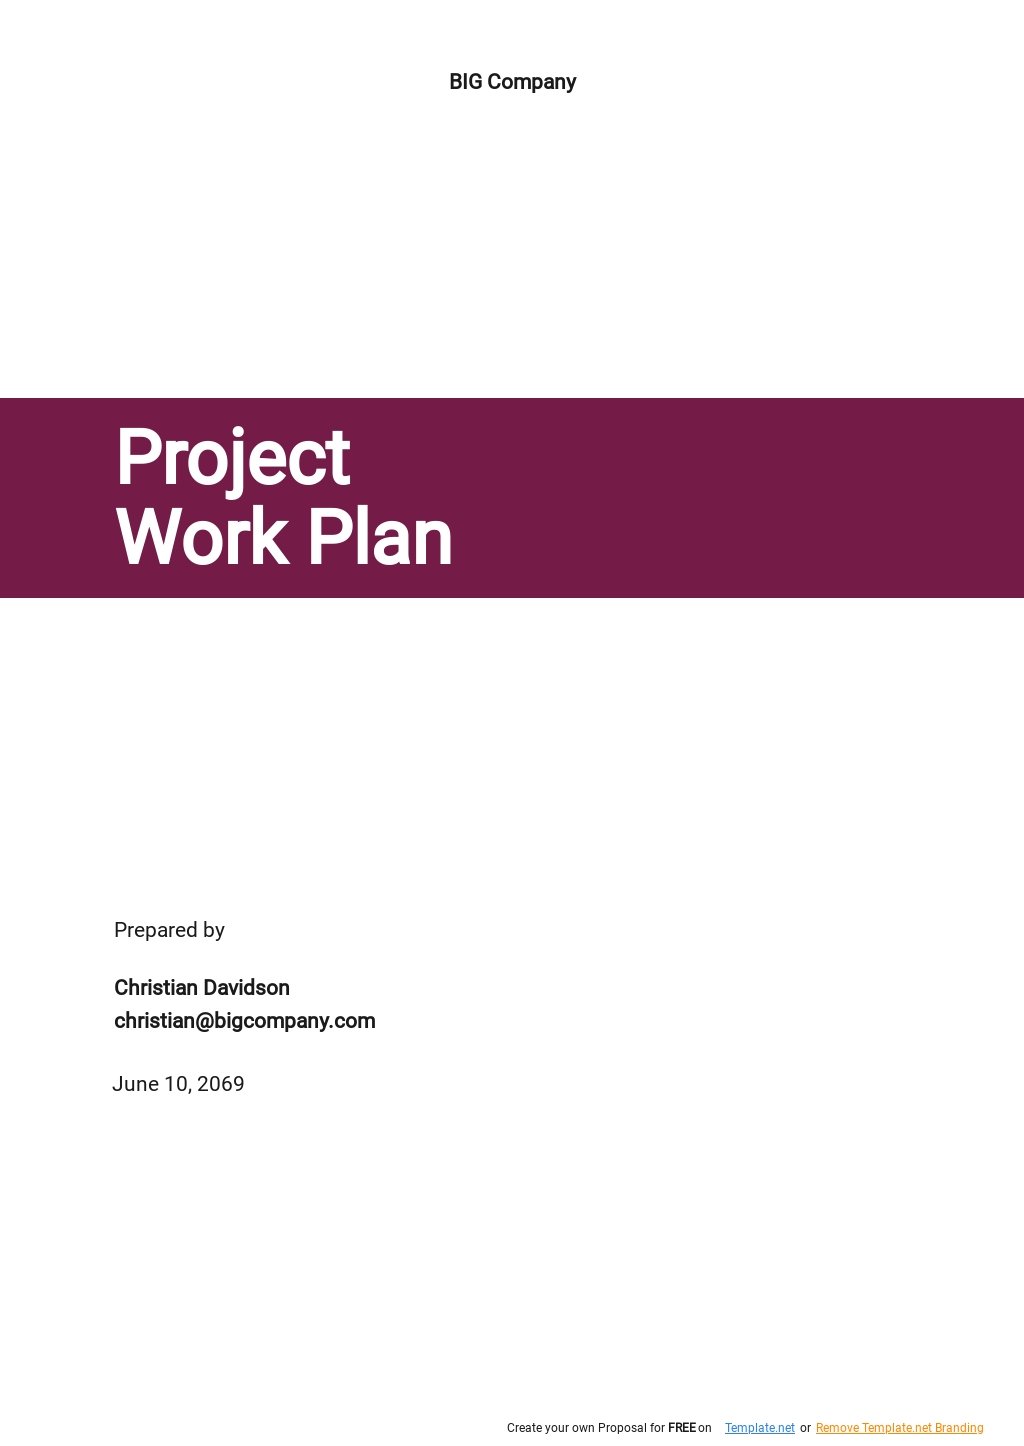 Project Work Plan Template.jpe